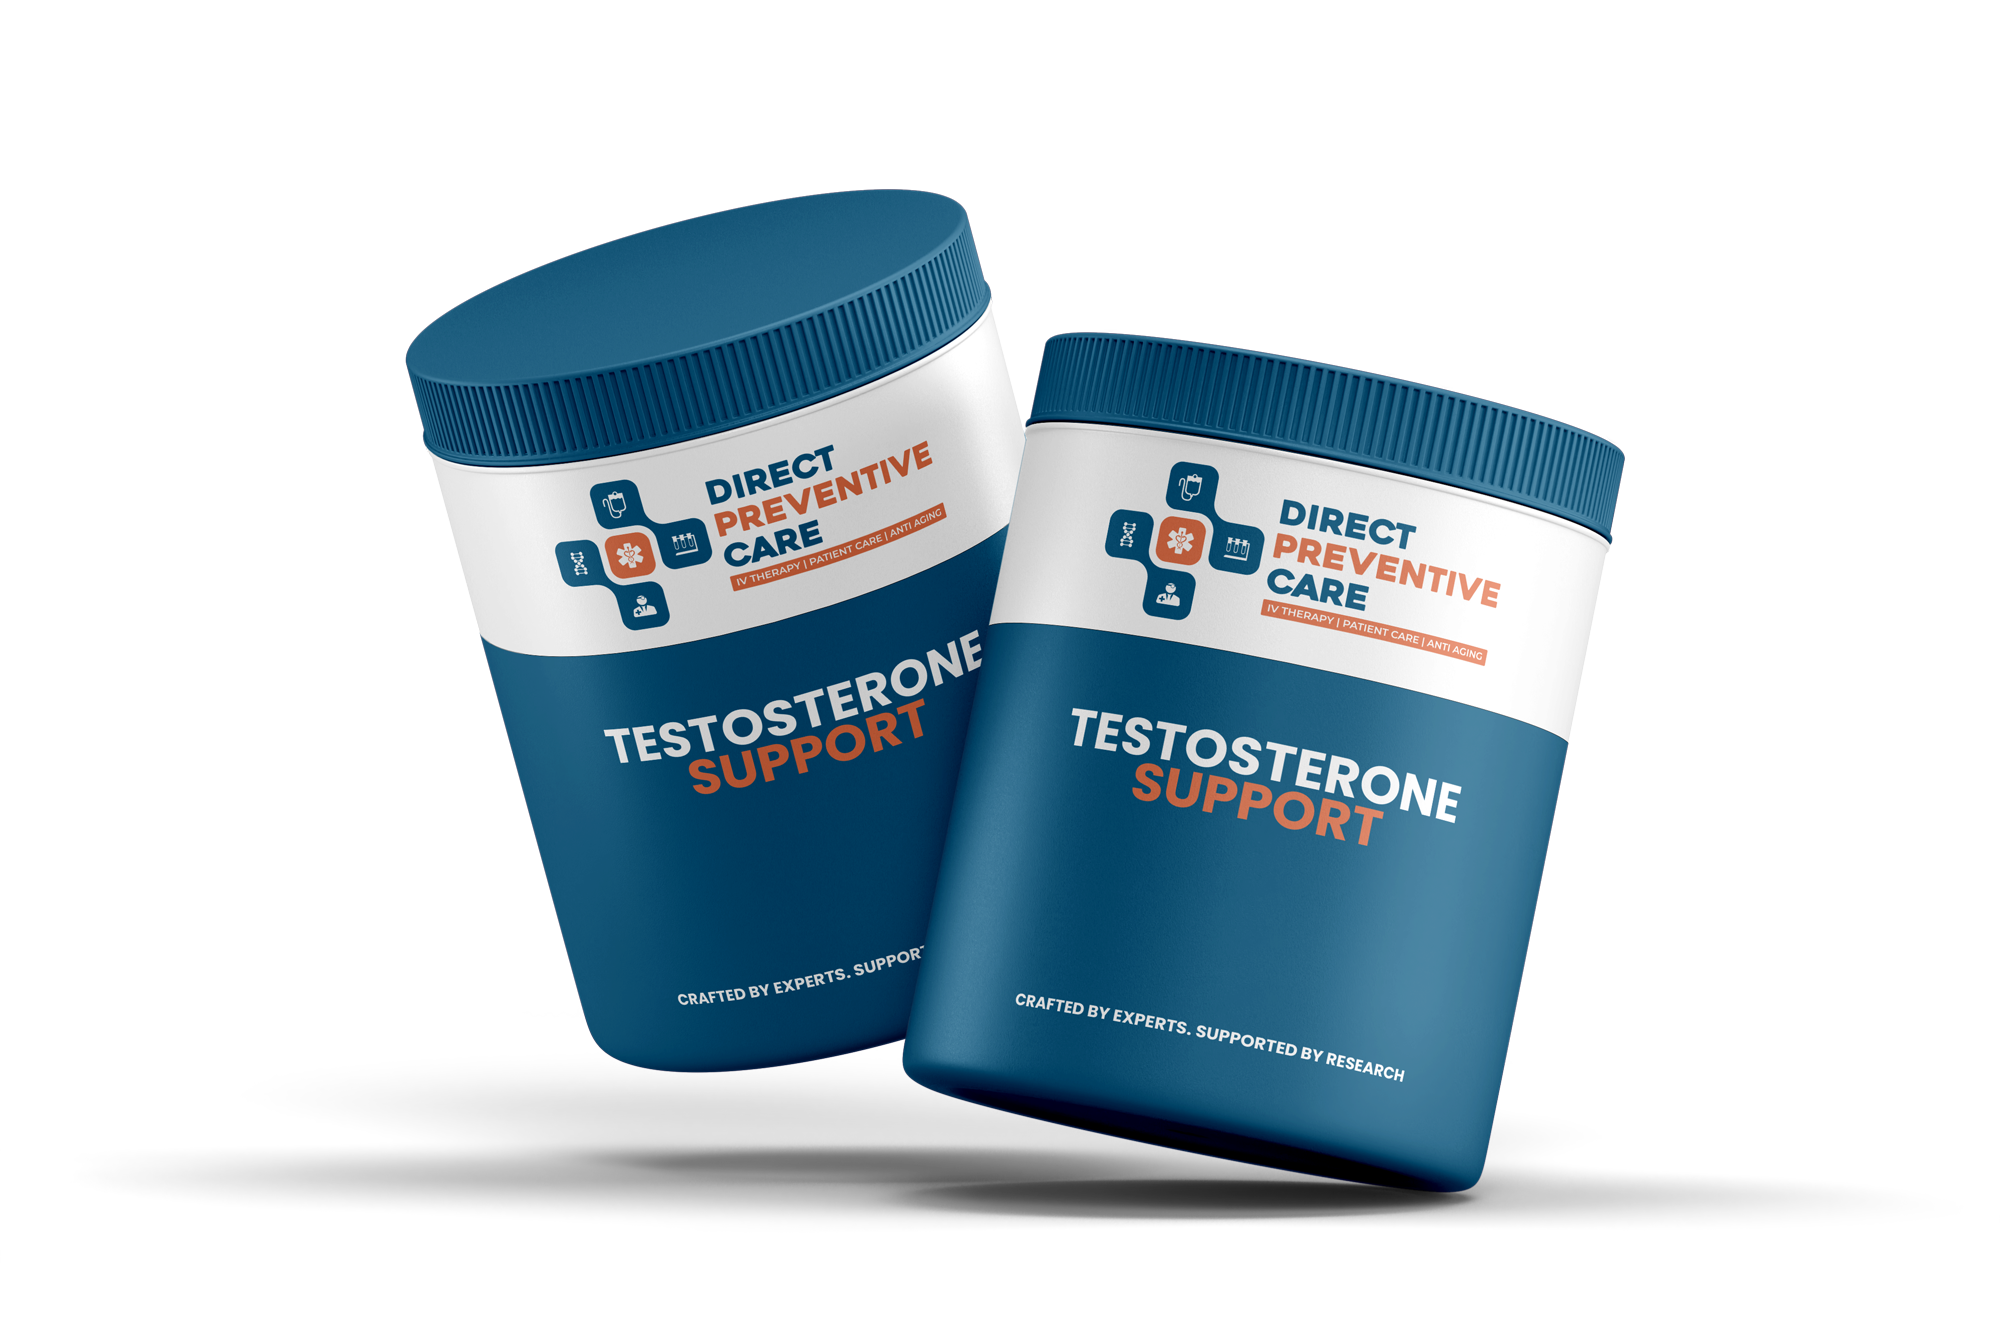 Testosterone-Support